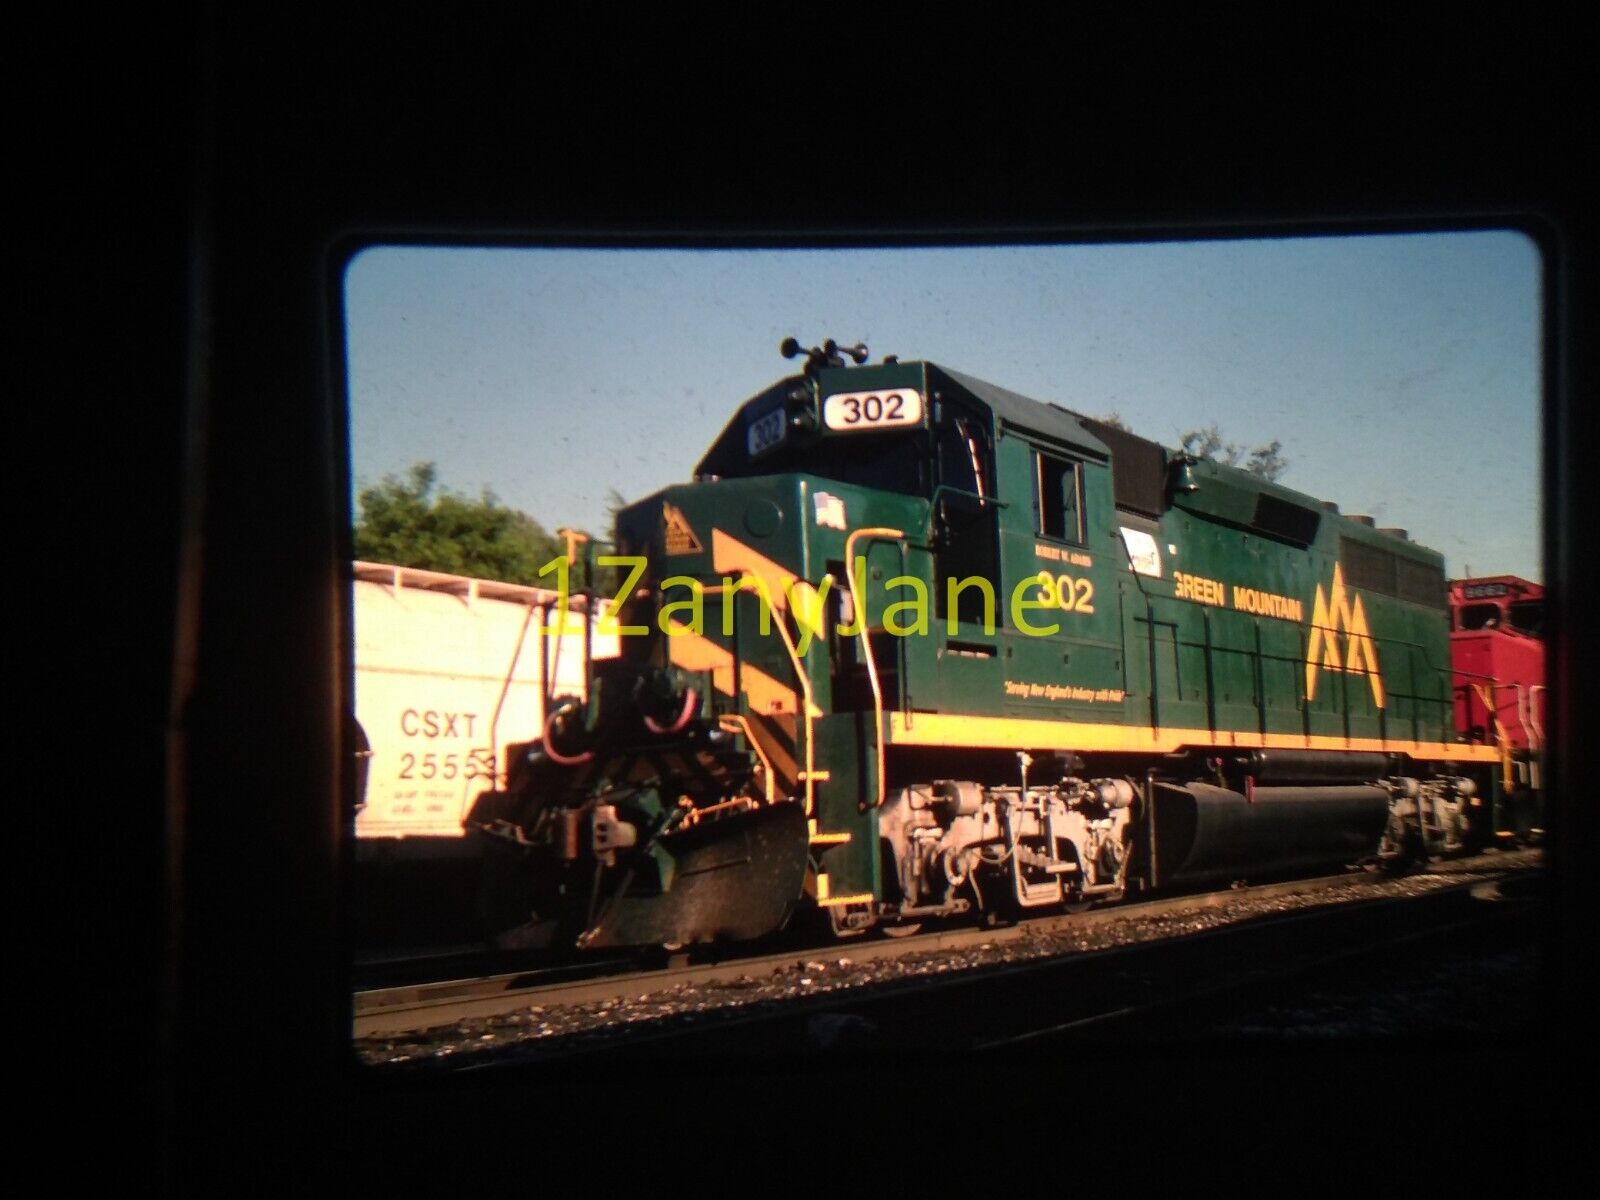 13917 VINTAGE Train Engine Photo 35mm Slide GMRC 302 GP40 RUTLAND VT JUN 17 03